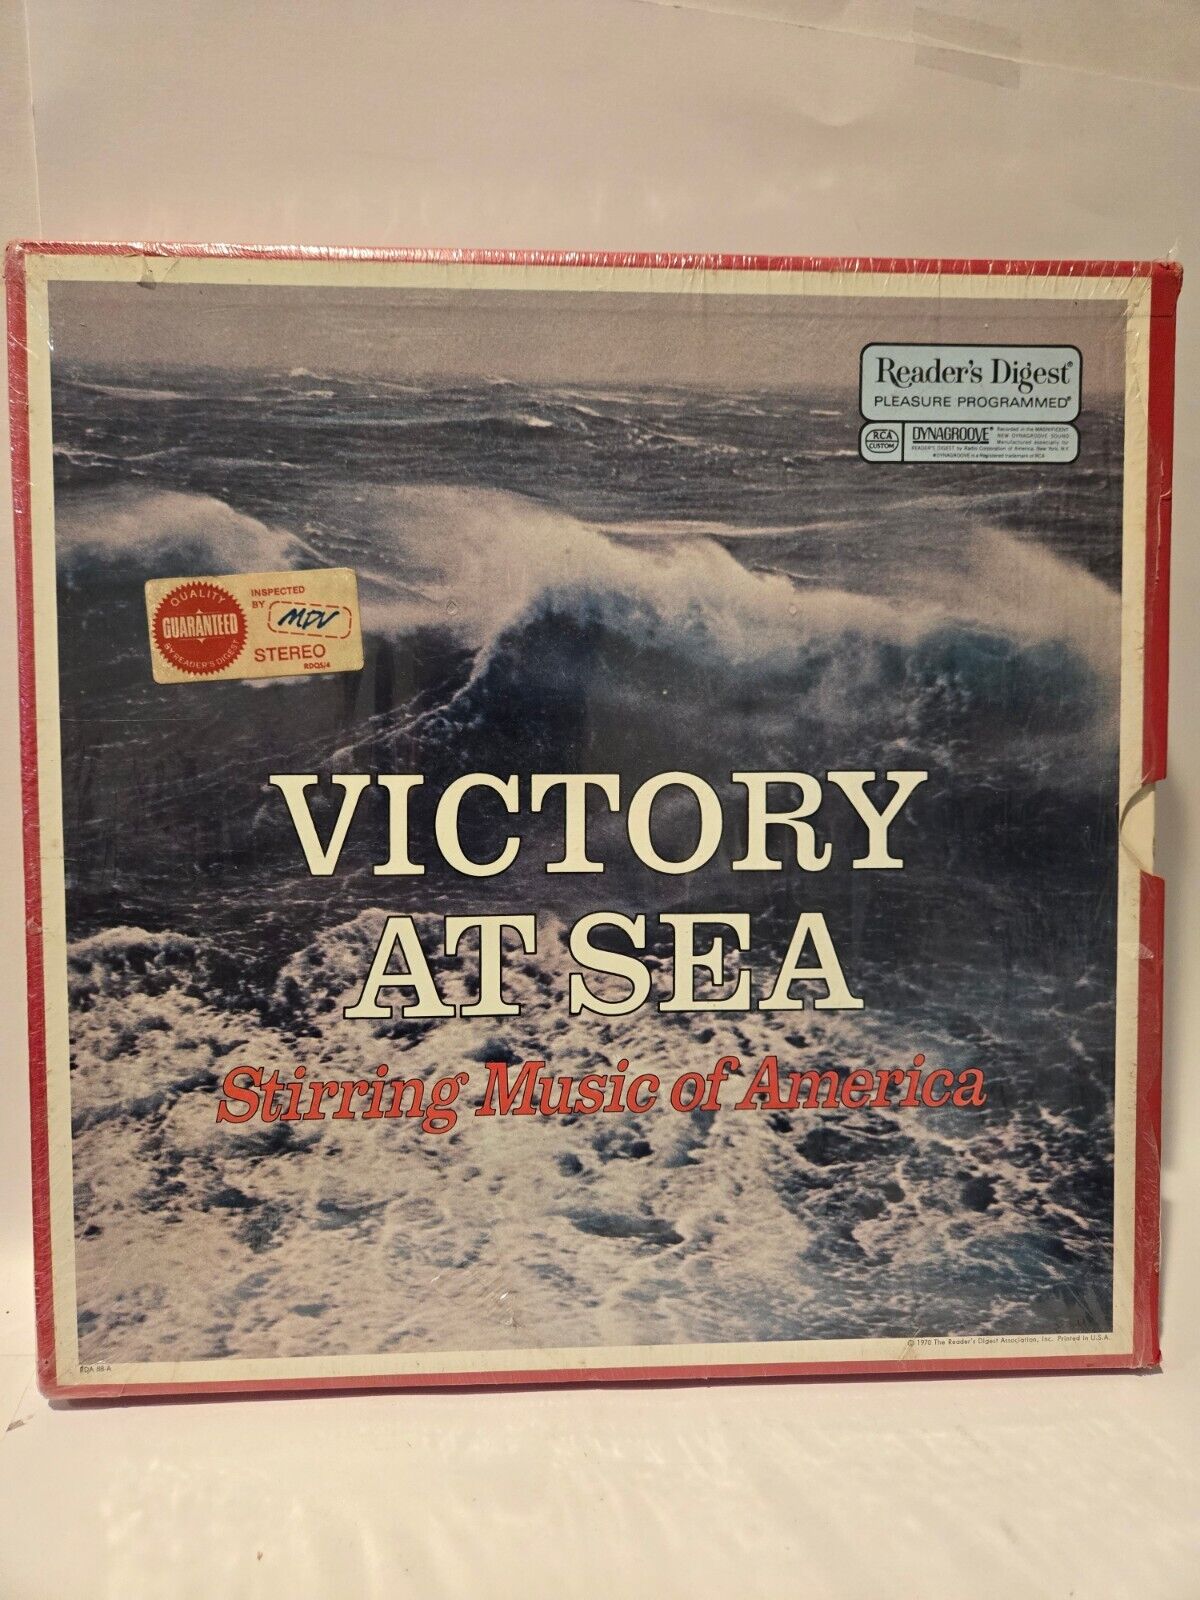 Reader's Digest Victory at Sea 4 Album LP Boxed Set Original shrink-NEW(other)